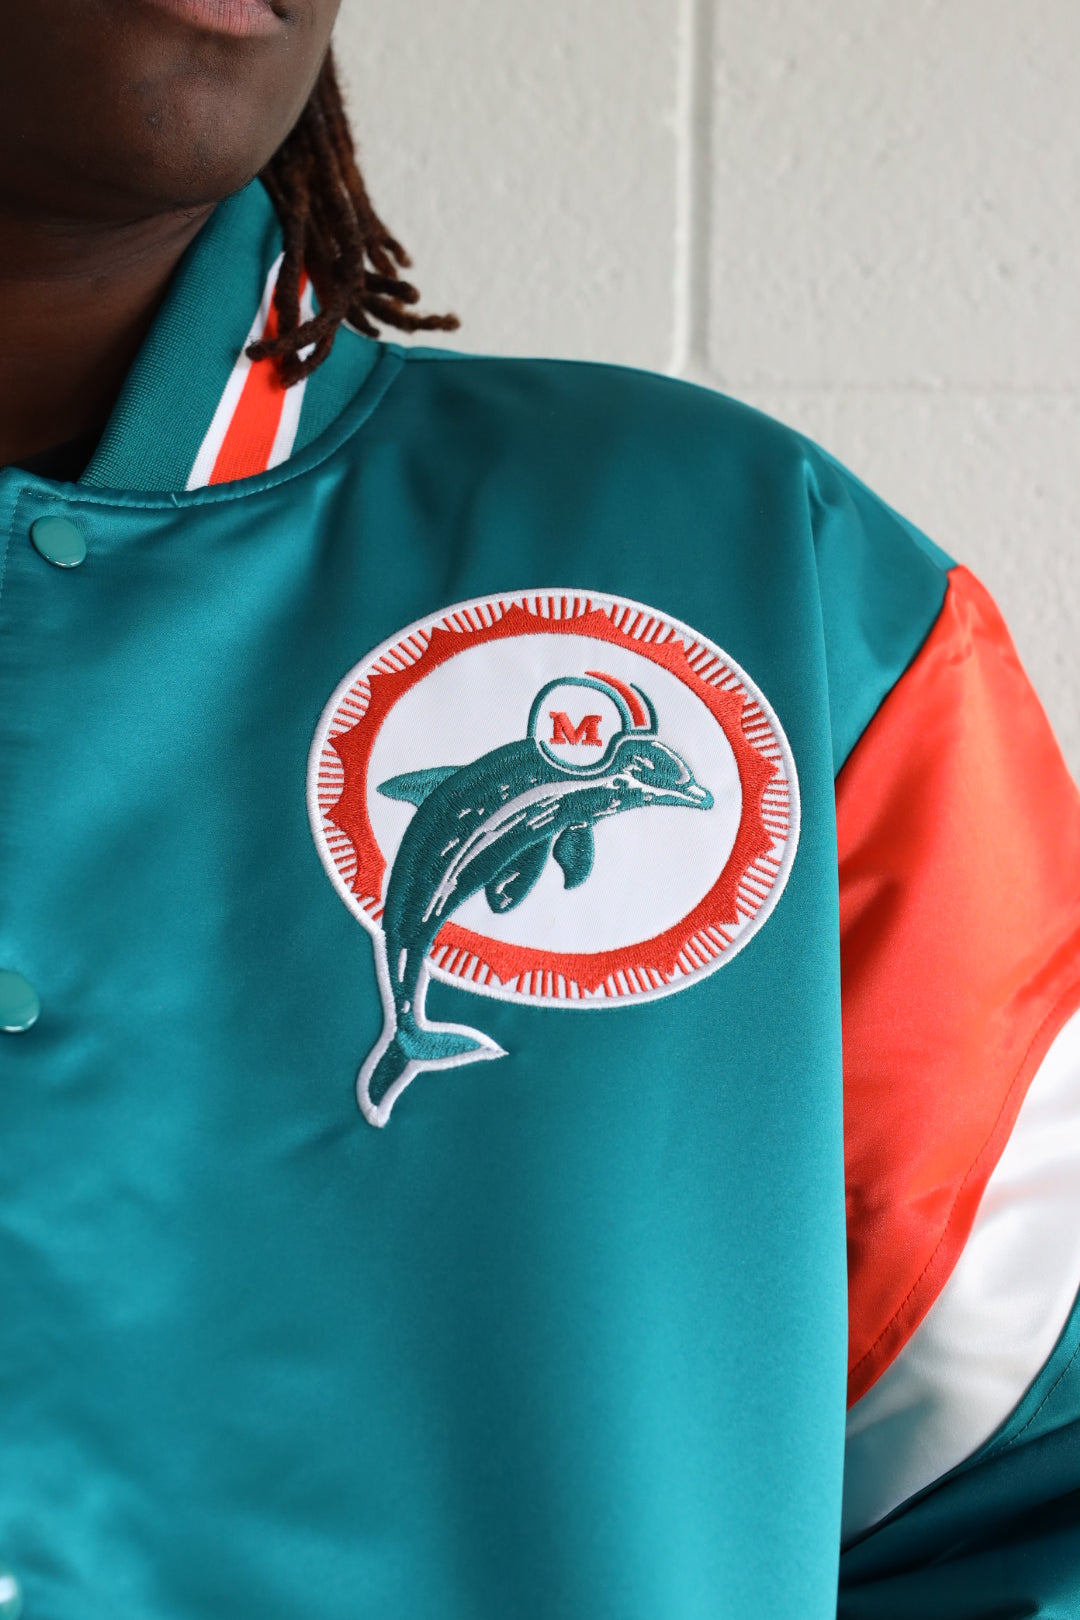 Miami Dolphins Heavyweight Satin Jacket